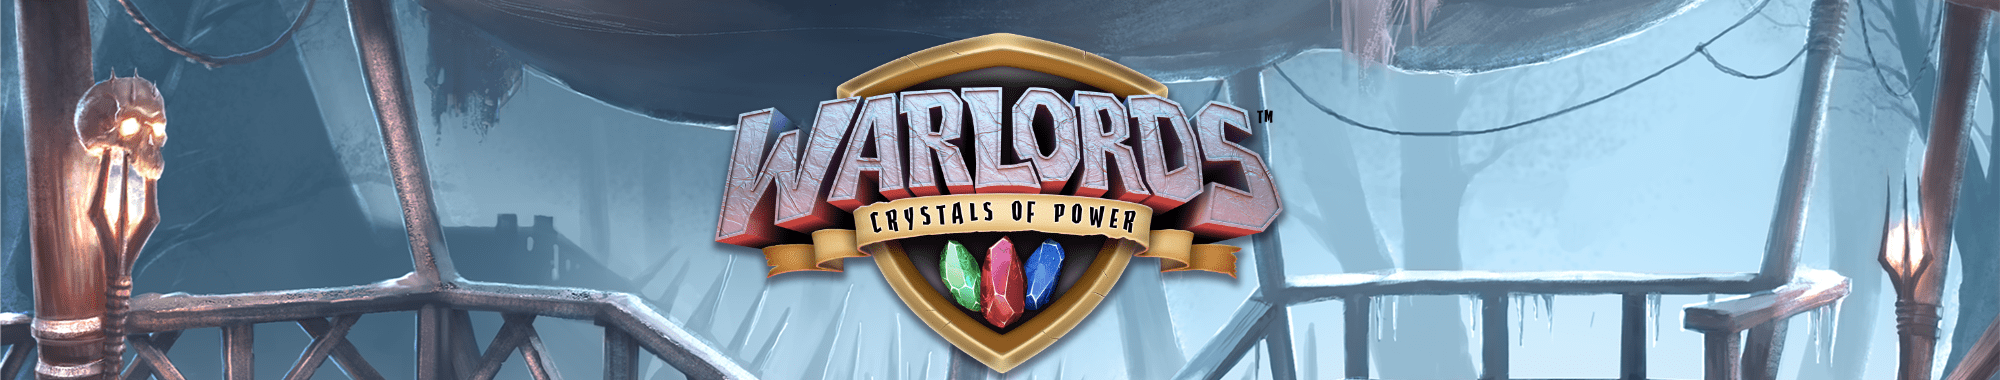 Warlords crystals of power rtp antena 1